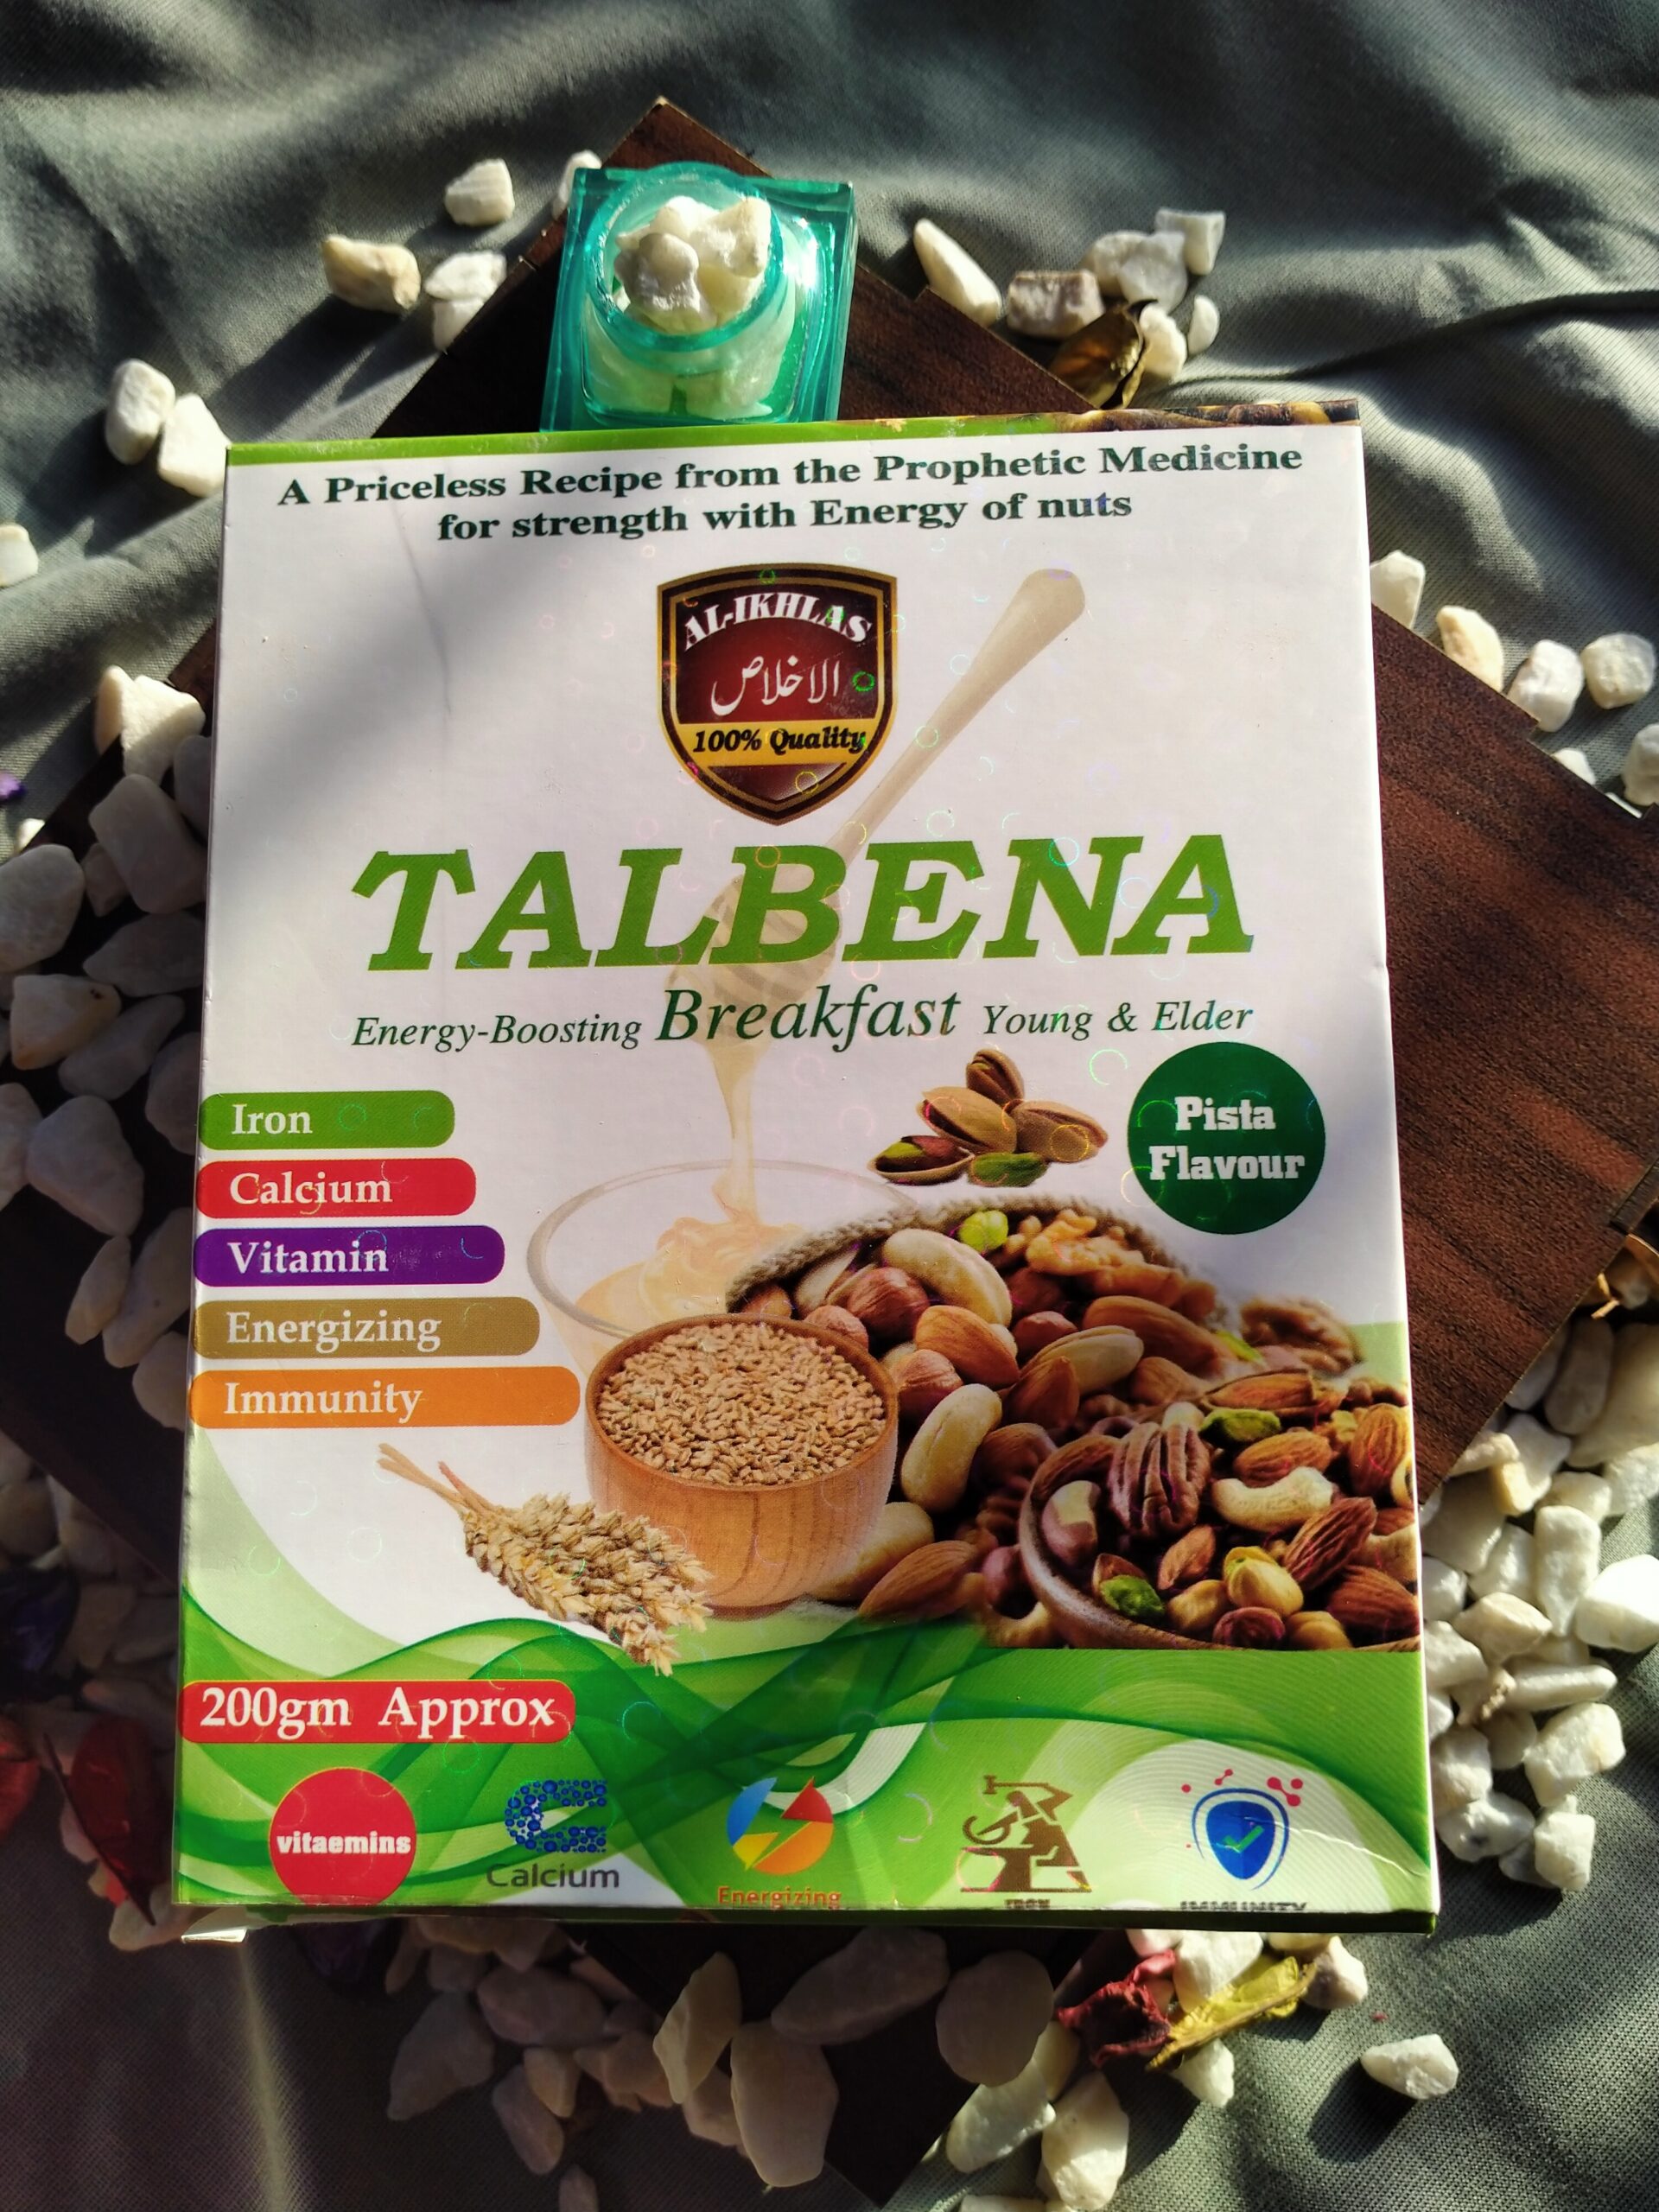 Buy Talbina Online - Talbeena Apricot | Al-Shifa Naturals